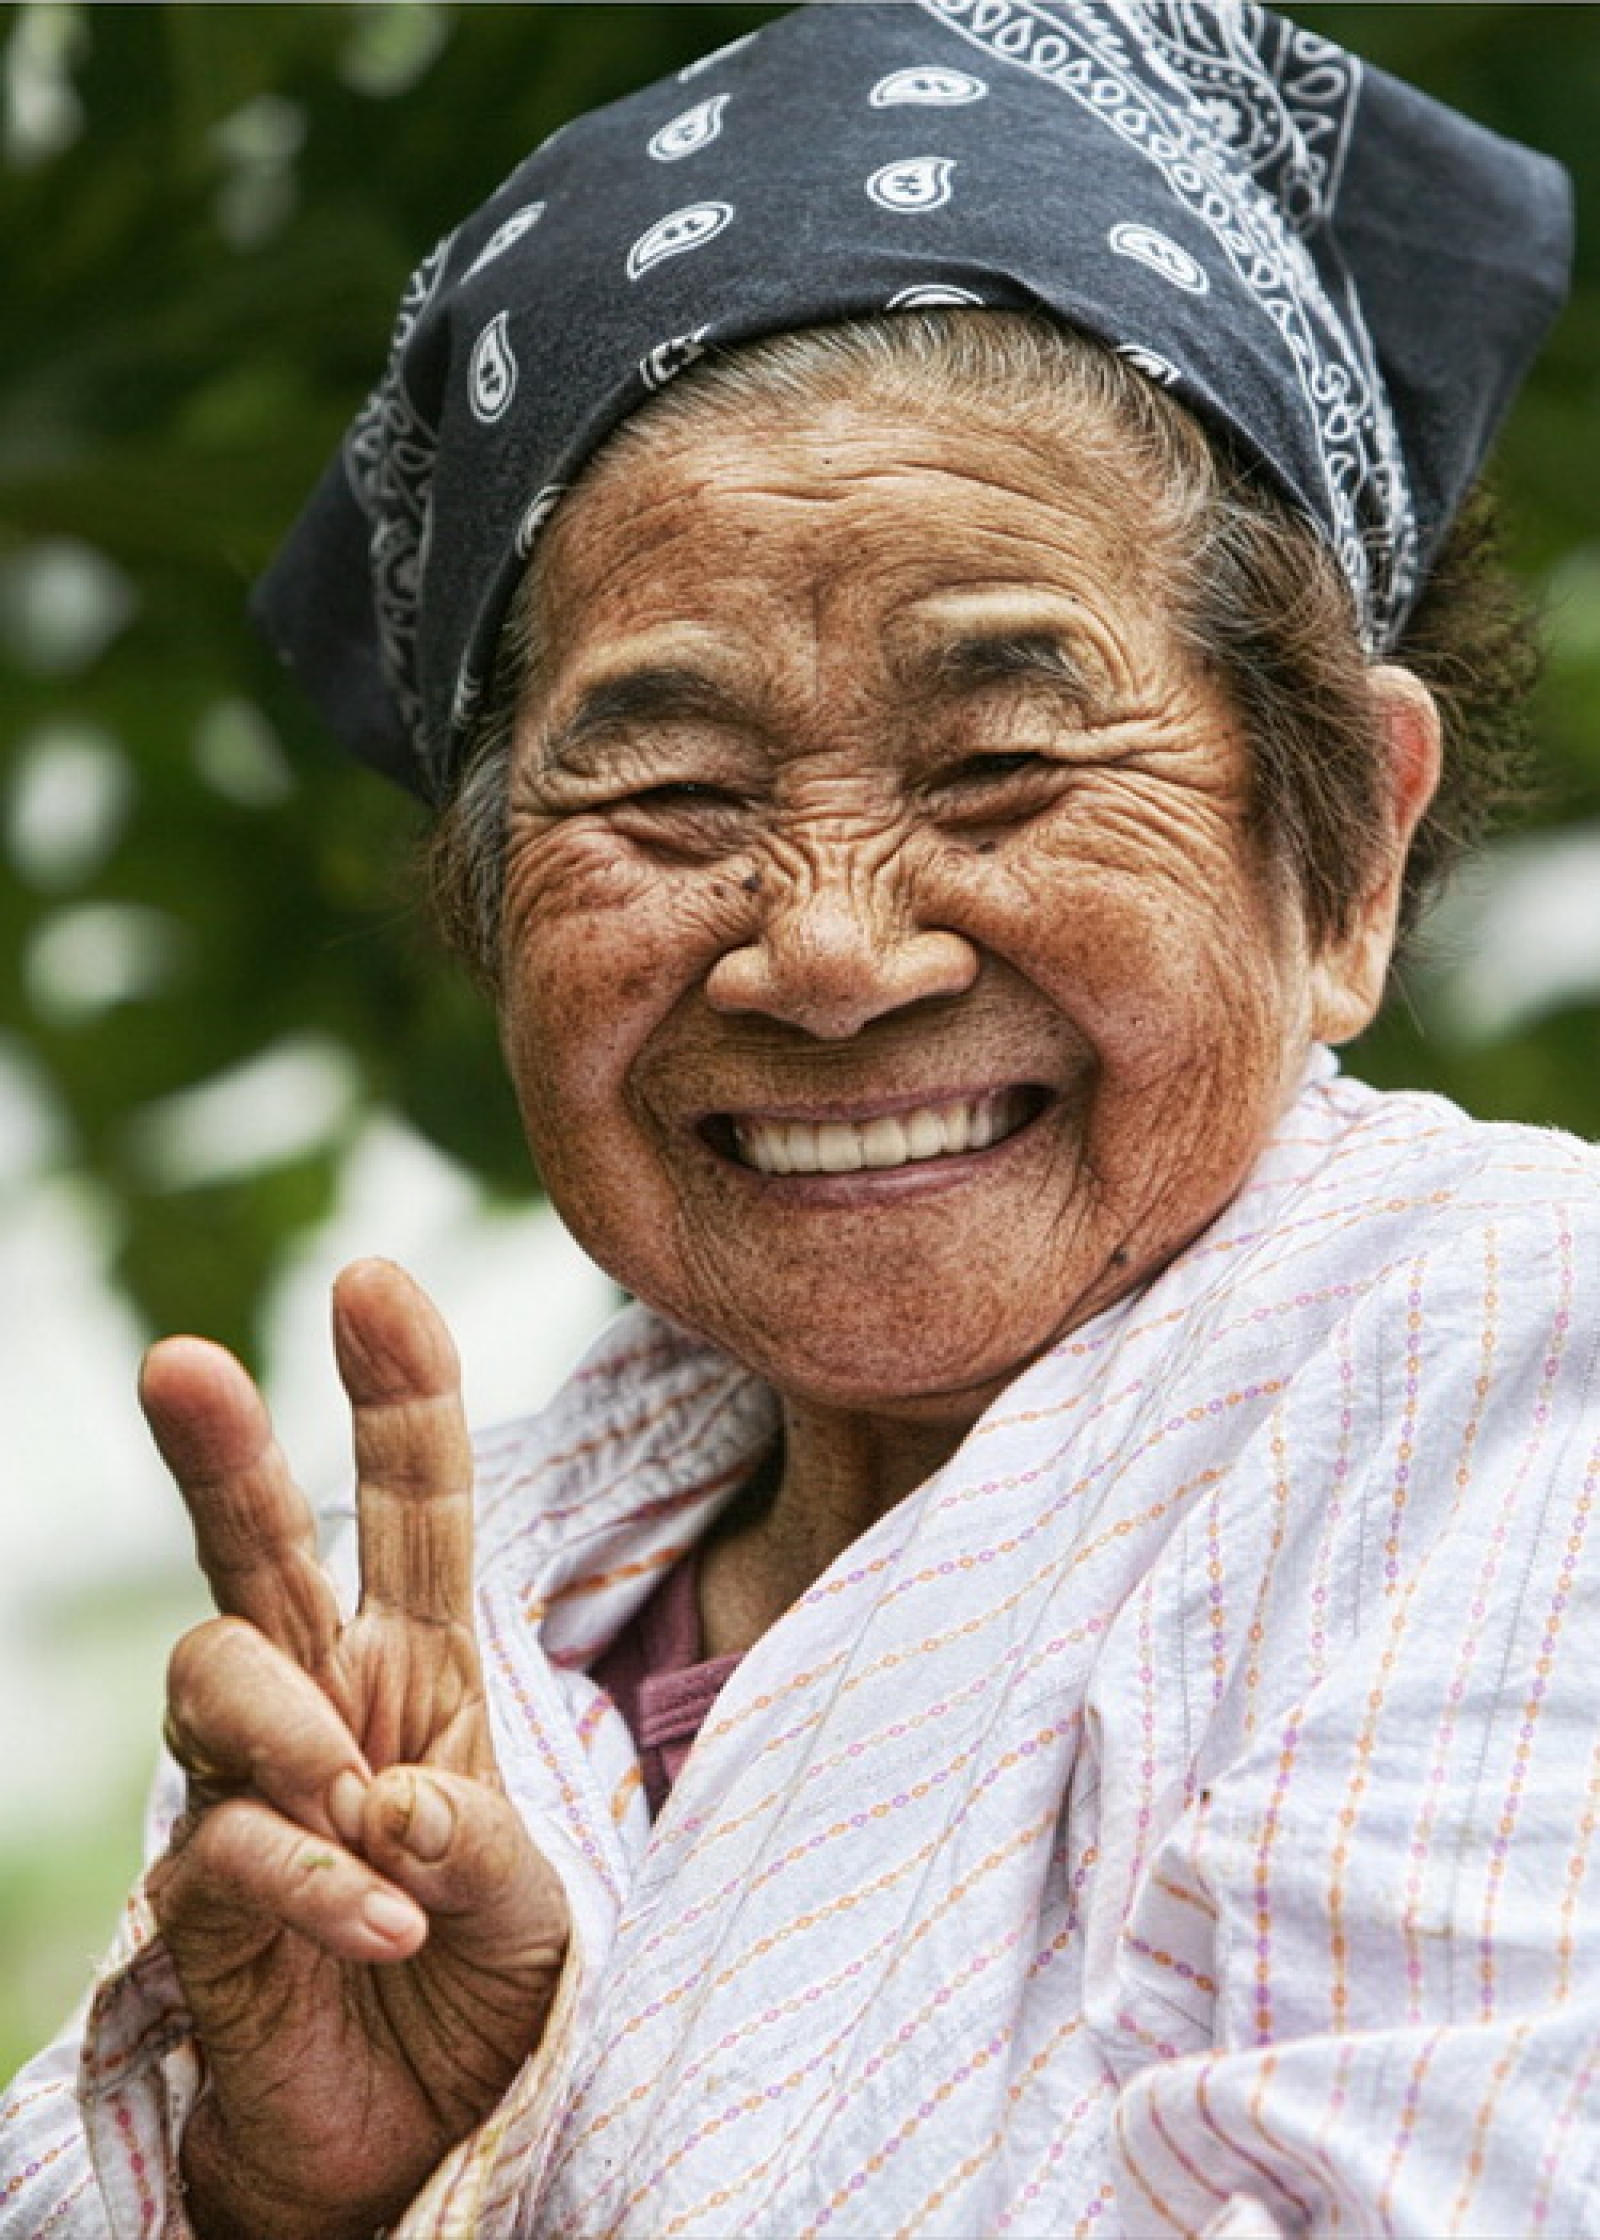 Бабушка азиат. Японские долгожители Окинава. Остров Окинава Япония долгожители. Жители острова Окинава. Долголетие японцы Окинава.